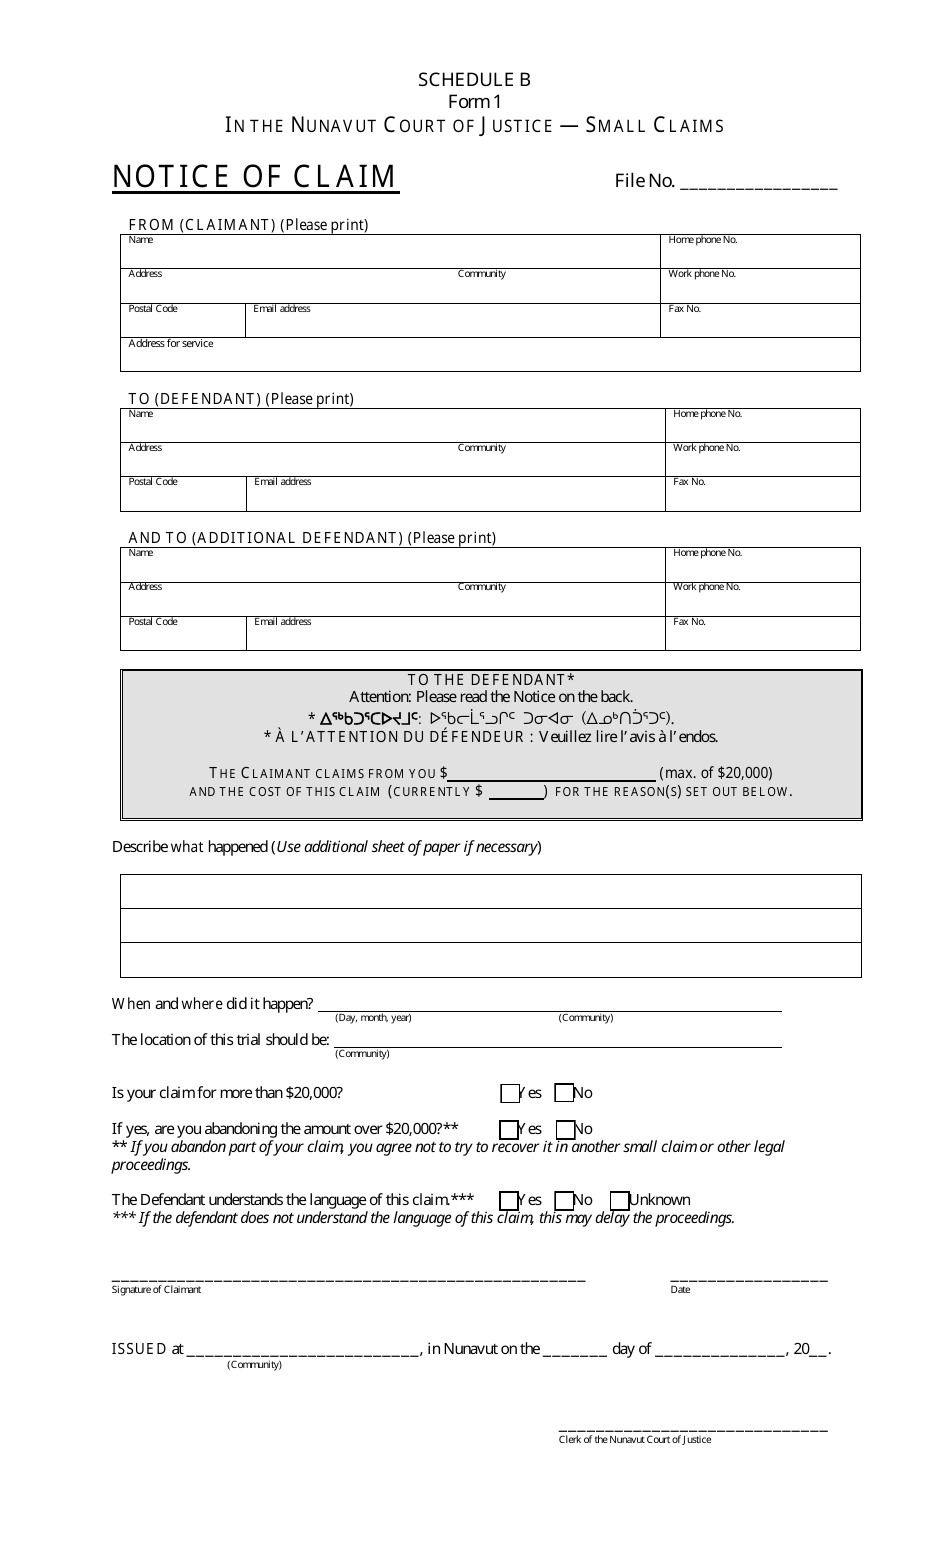 Form 1 Schedule B Notice of Claim - Nunavut, Canada, Page 1